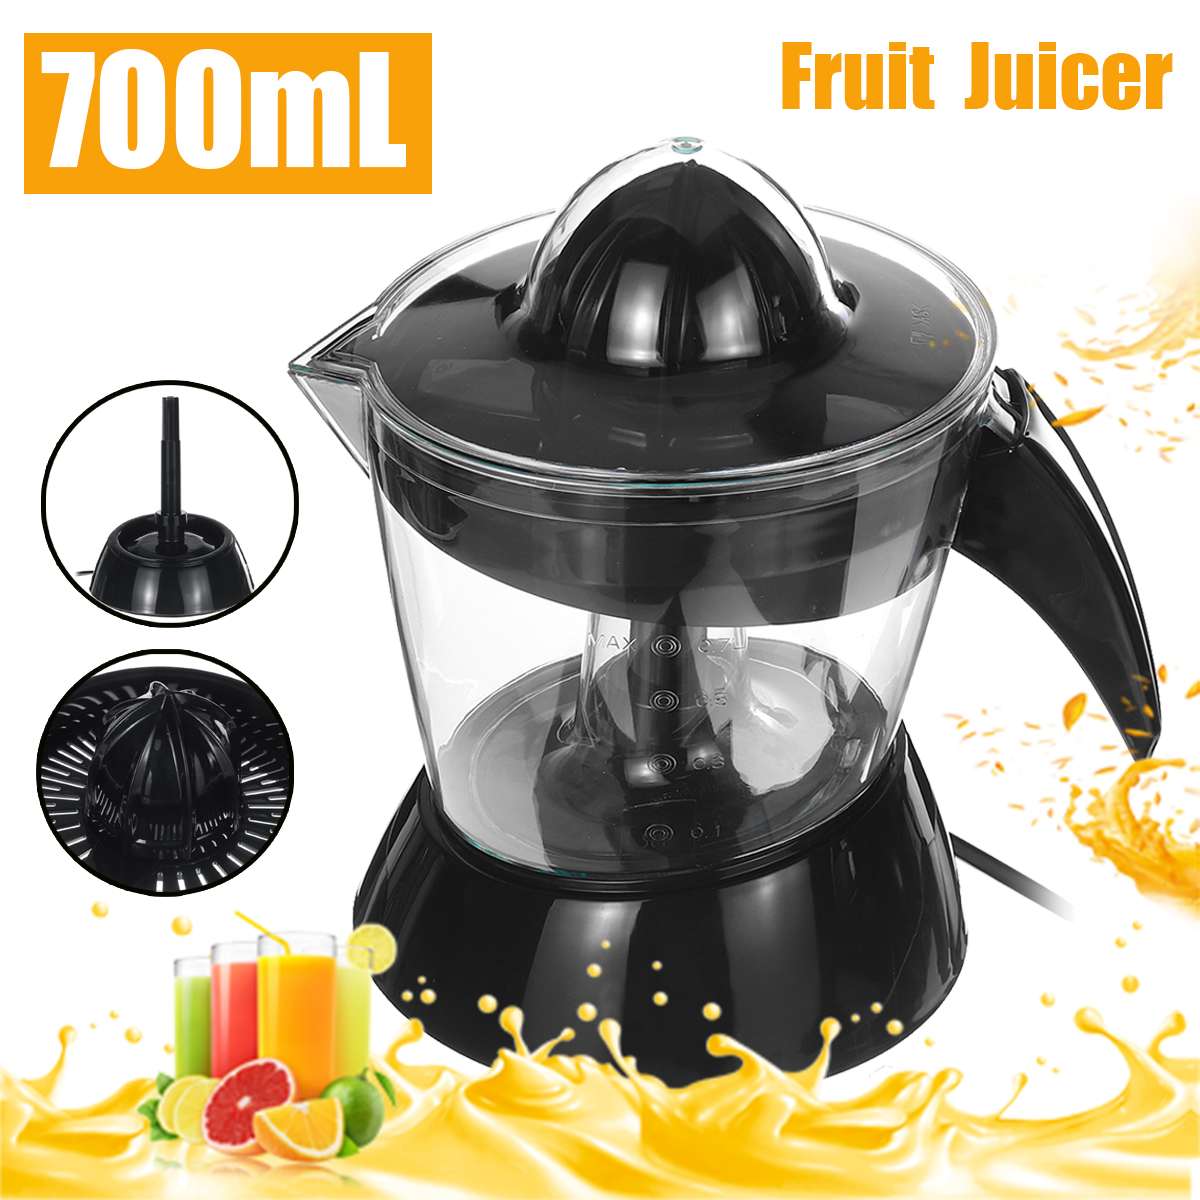 220V 700ml Electric Citrus Juicer Fruit Press Machine Orange Lemon Grapefruit Squeezer Scale Marking Home Juice Extractor